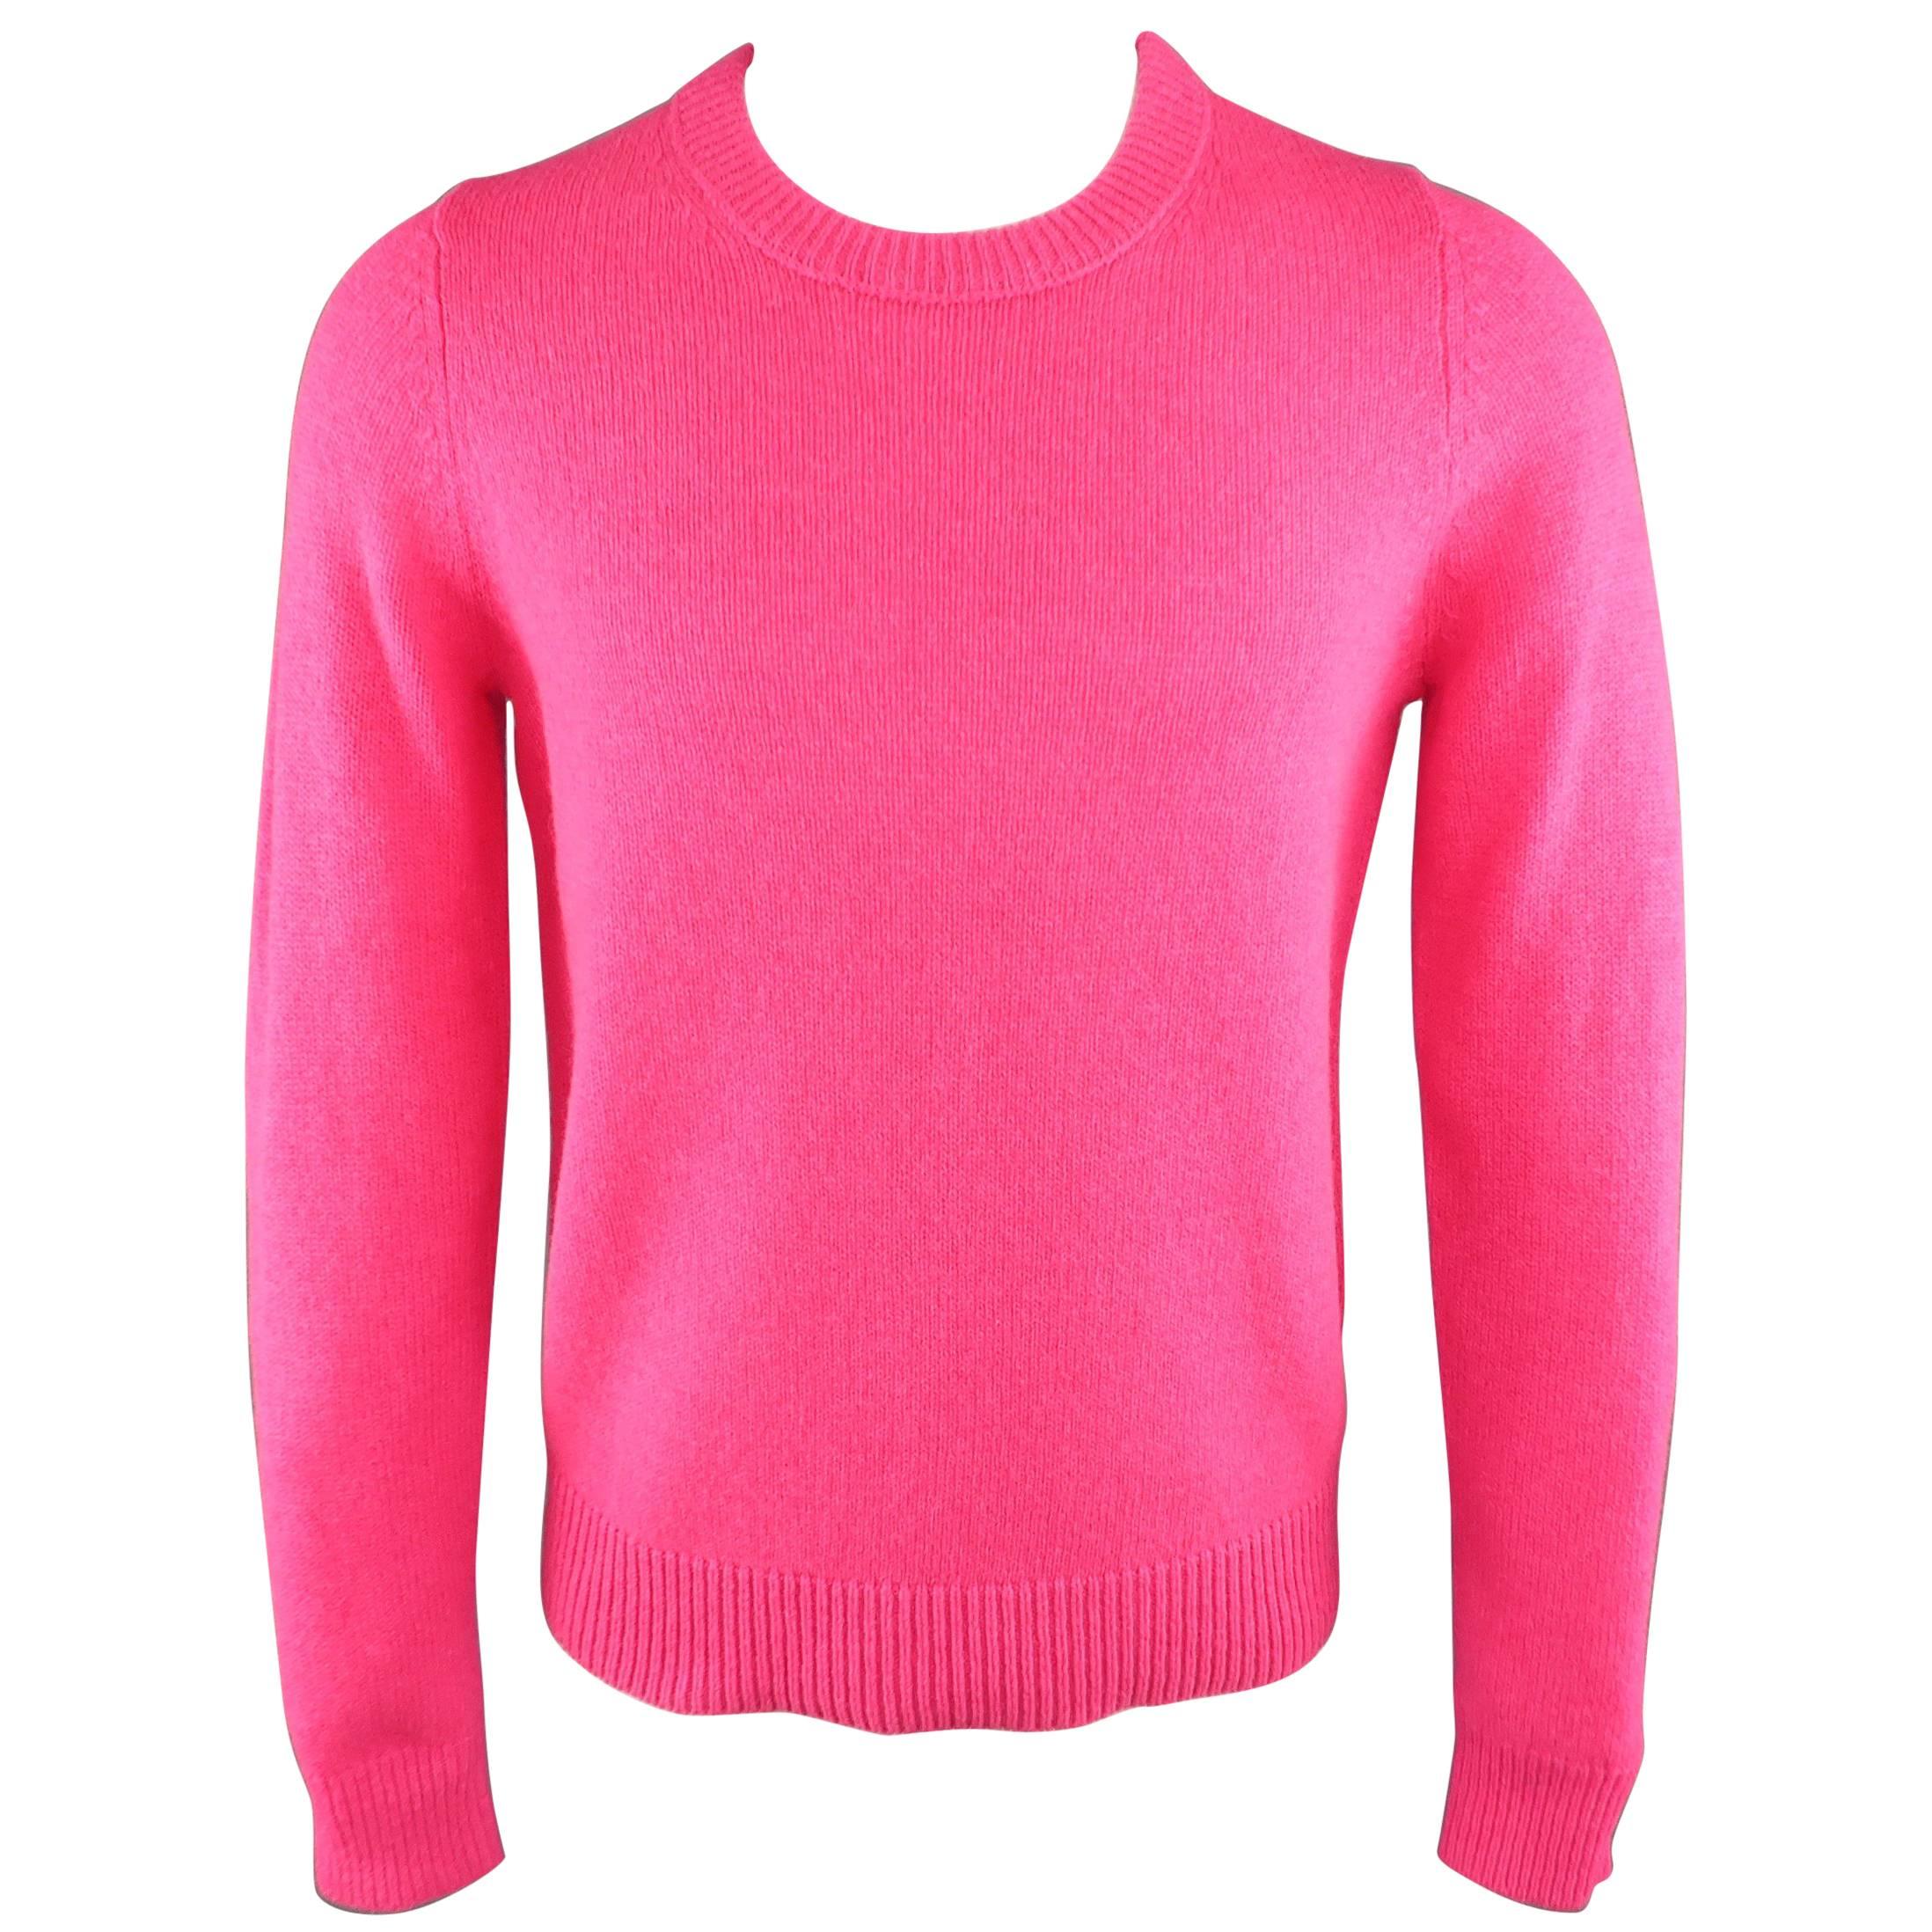 Men's ACNE STUDIOS Size M Neon Pink Wool Knit Crewneck Sweater